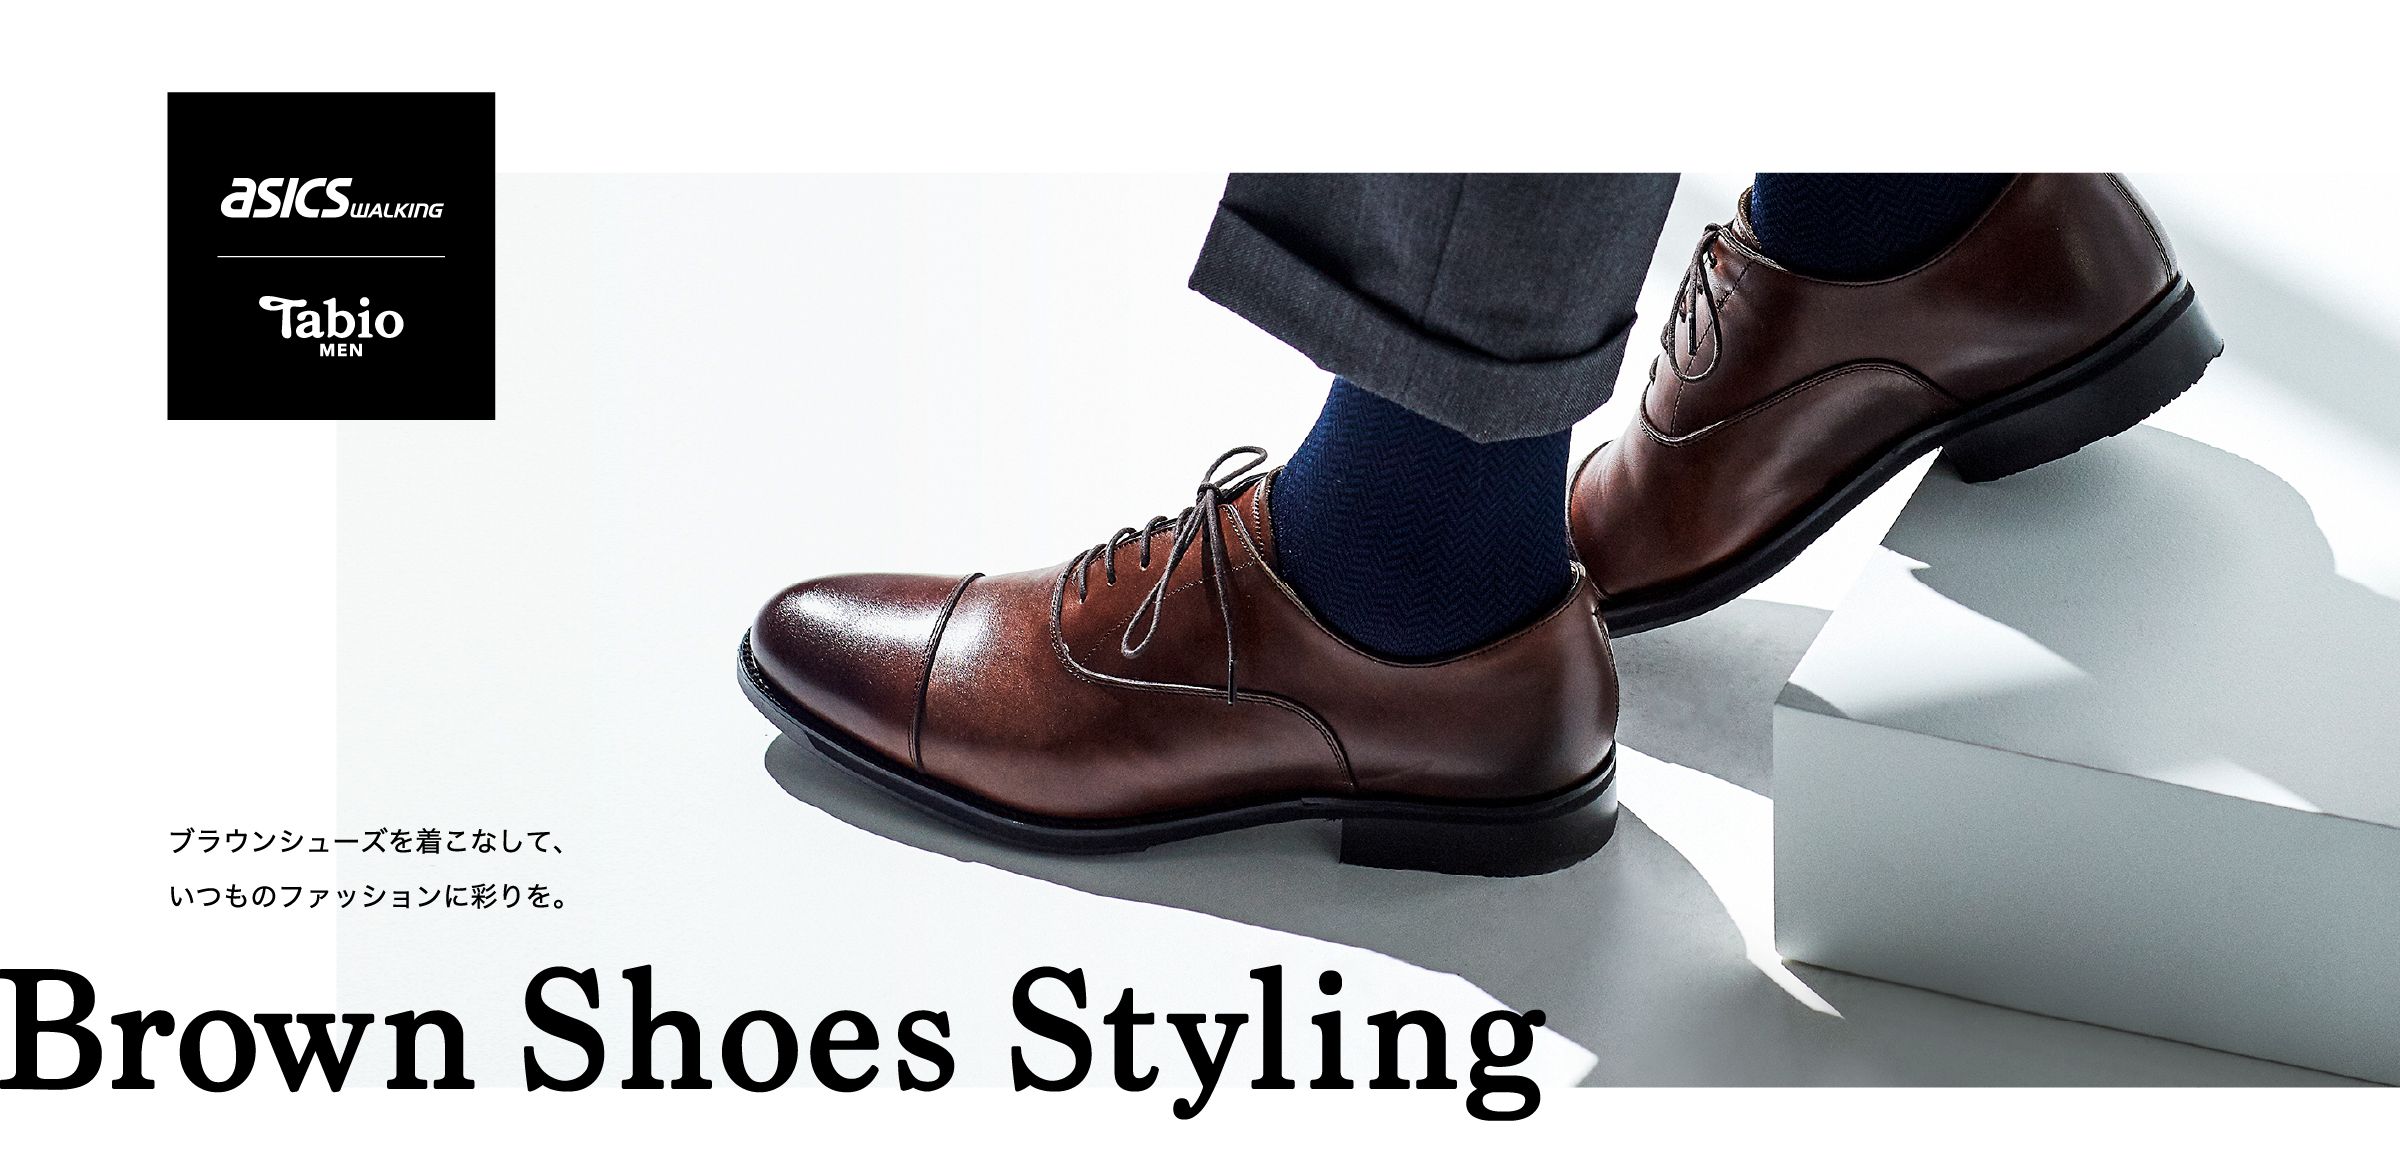 ASICS Walking × Tabio Brown Shoes Styling